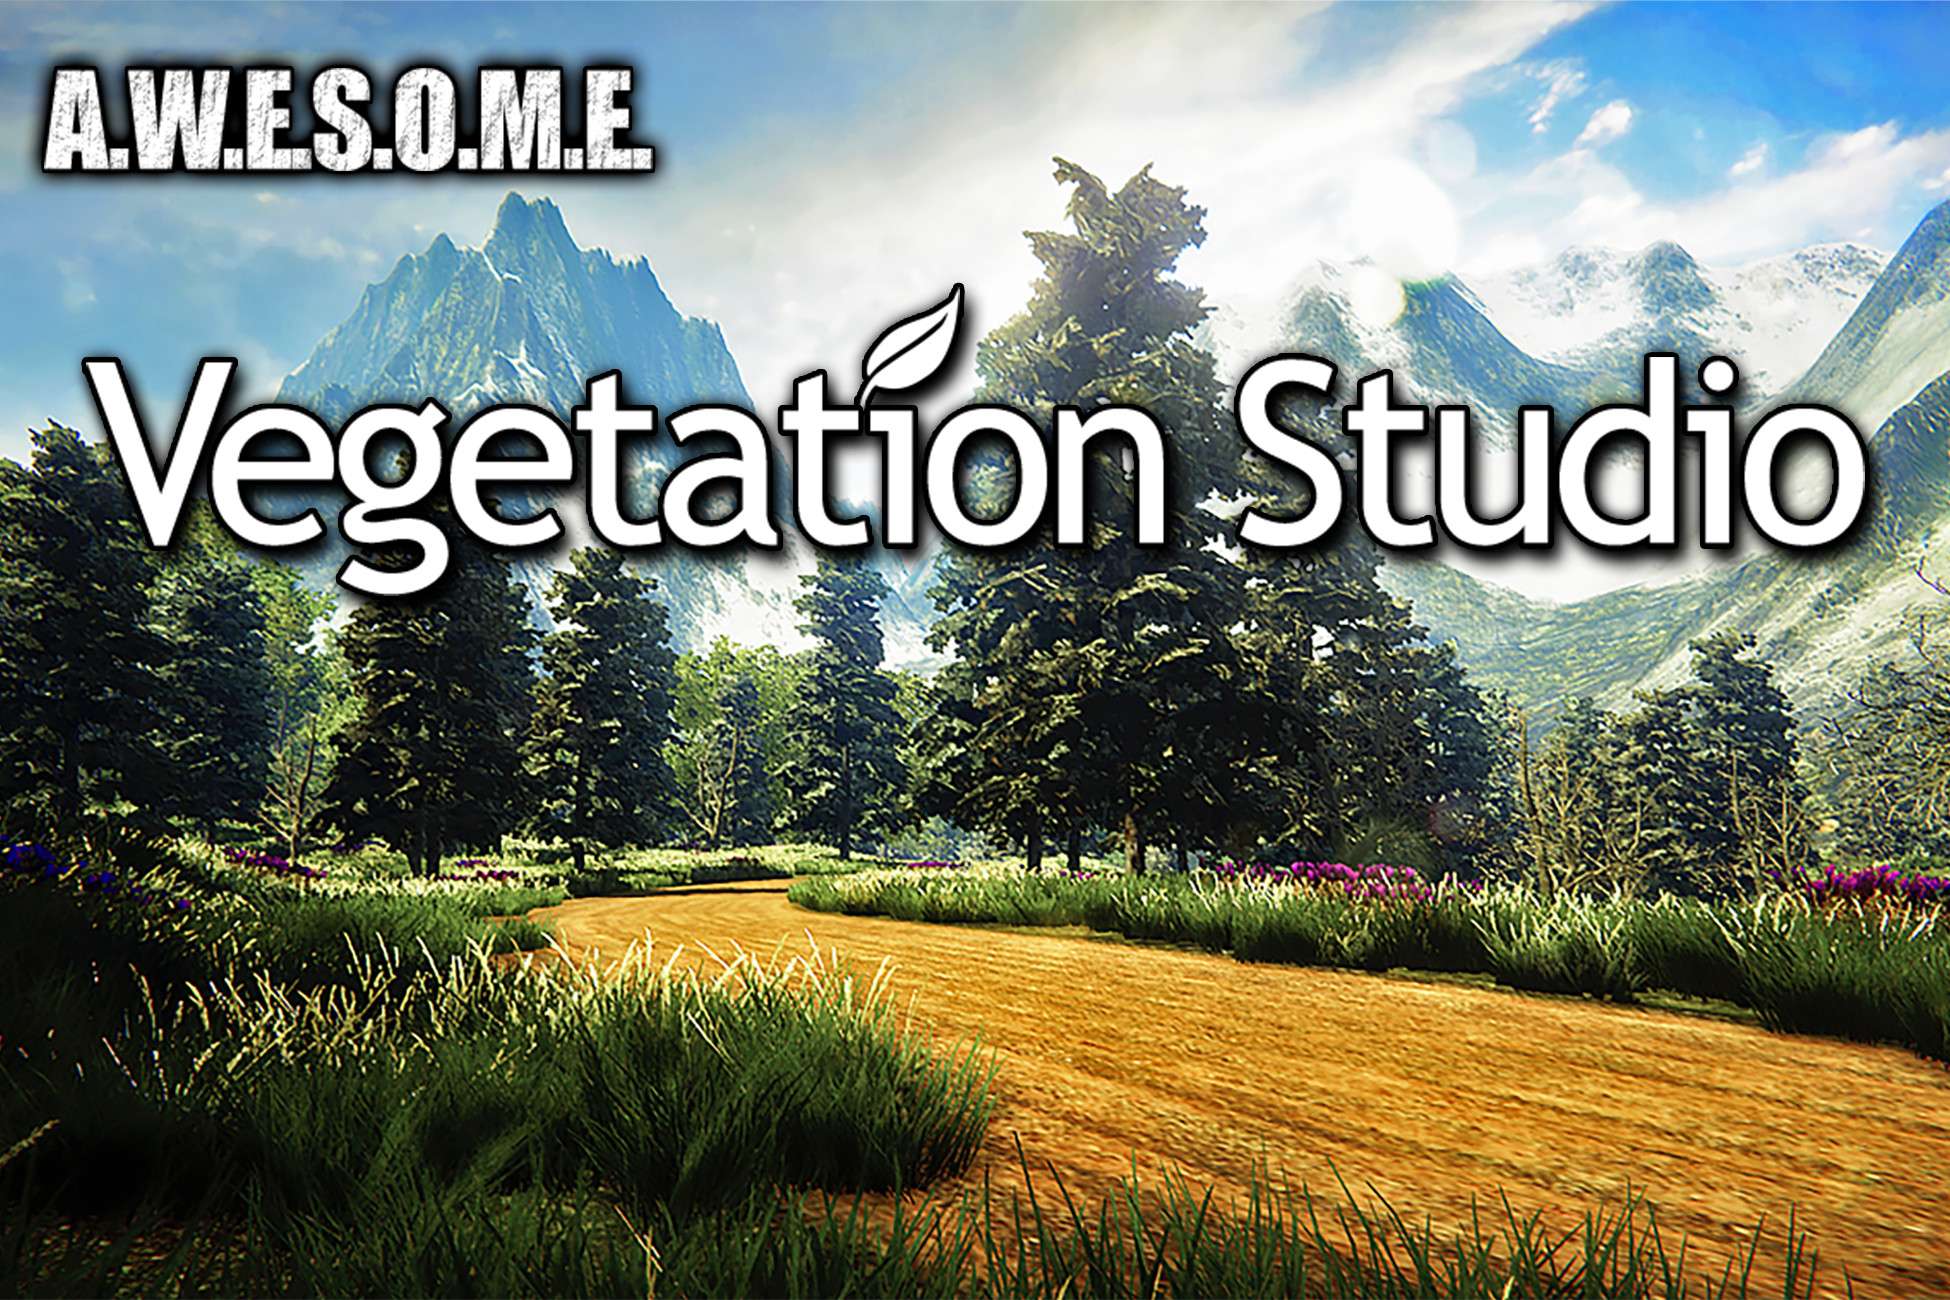 Asset collection. Vegetation Studio. Unity Studio download. Collect Asset. Adenoit vegetation.